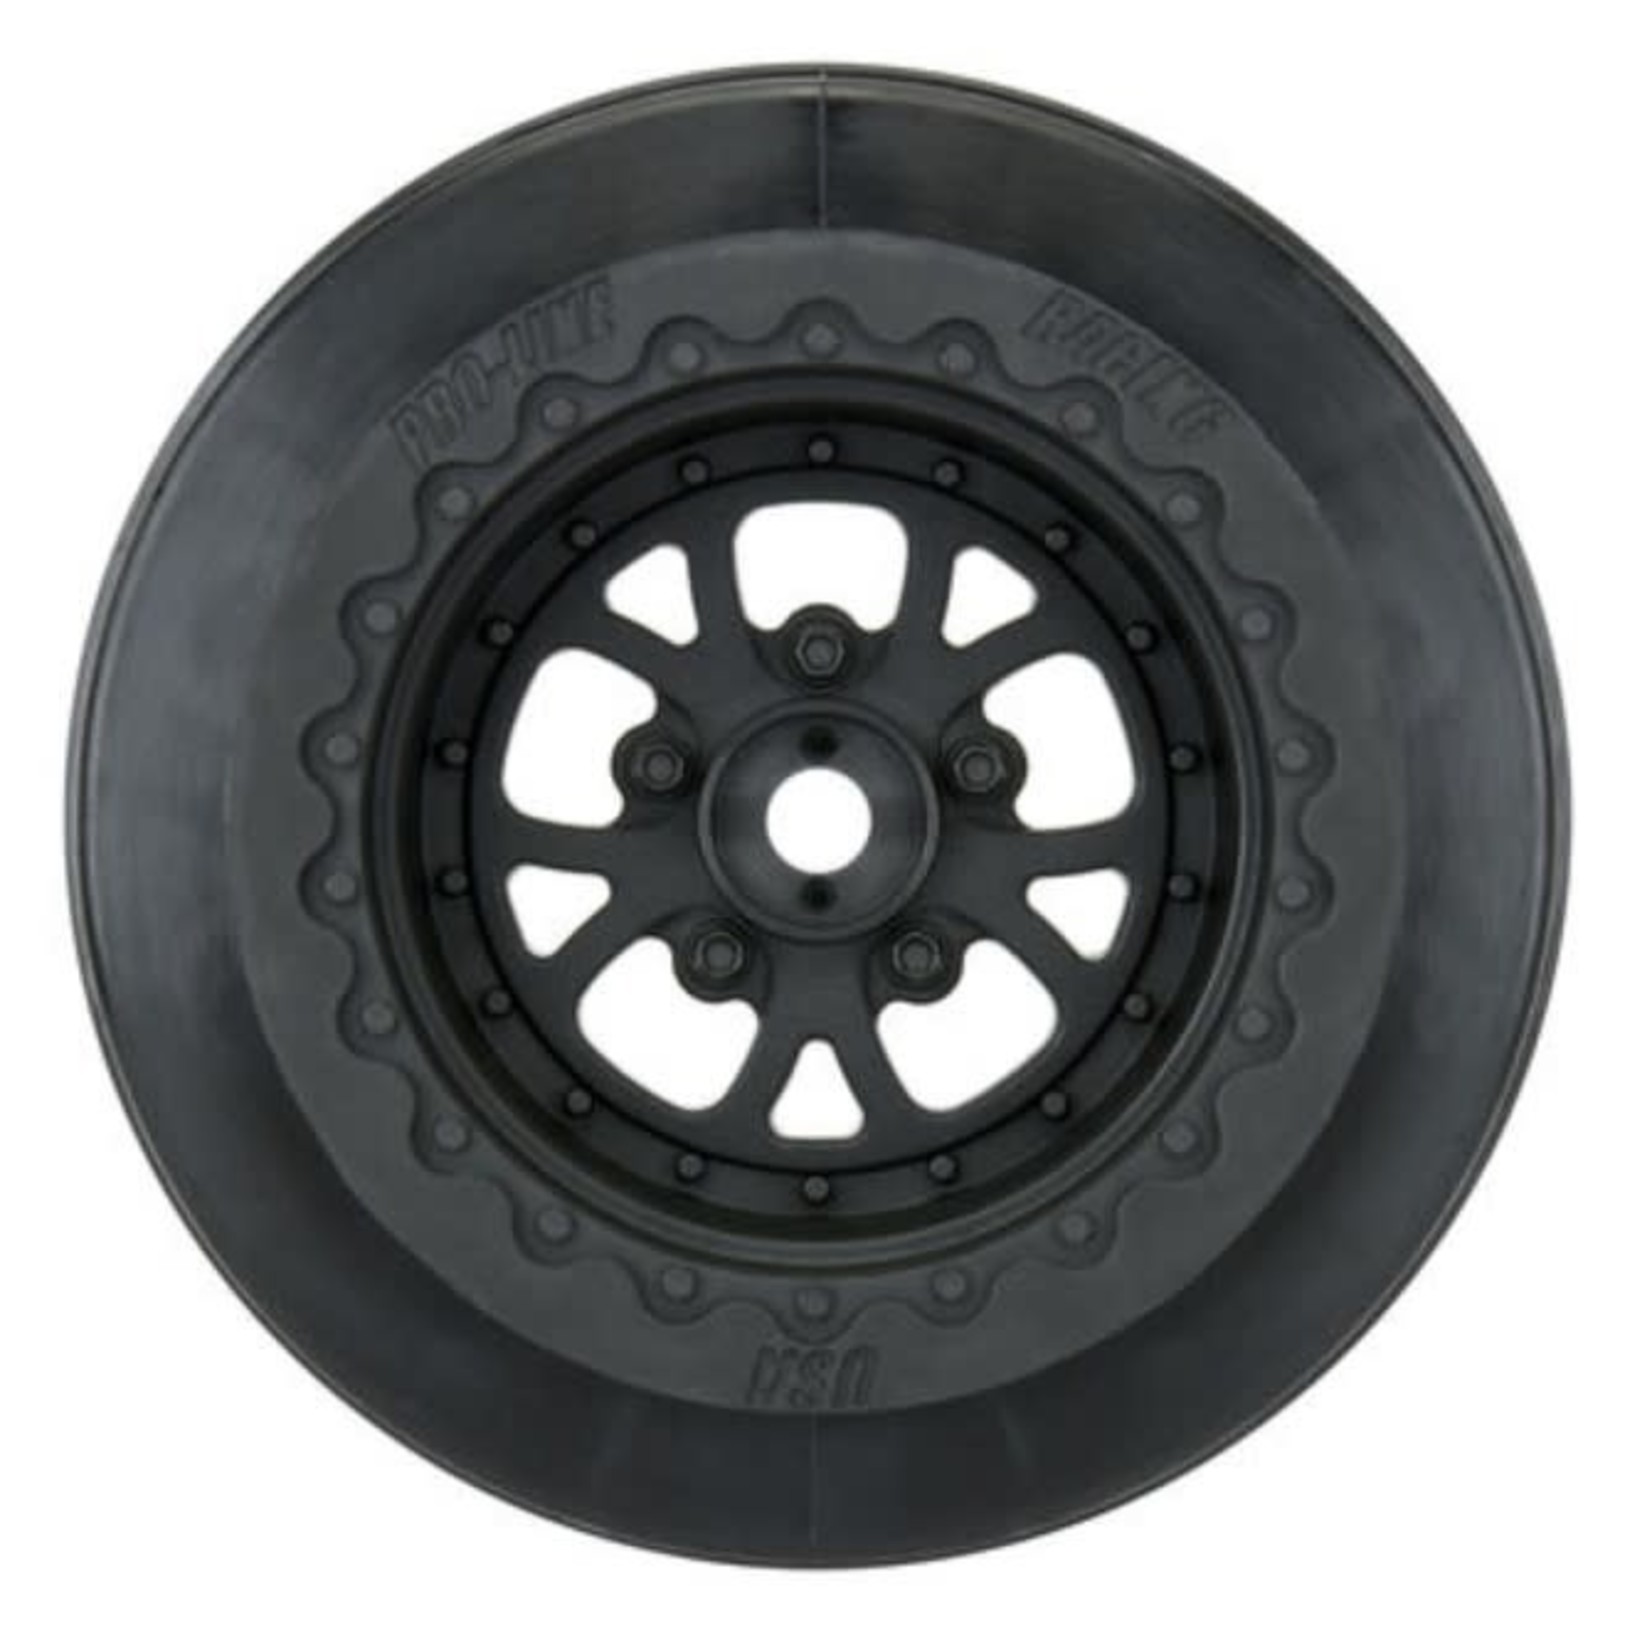 Pro-Line Racing 2.2 / 3.0 Pomona Drag Spec Wheels Black Slash Rear (2)